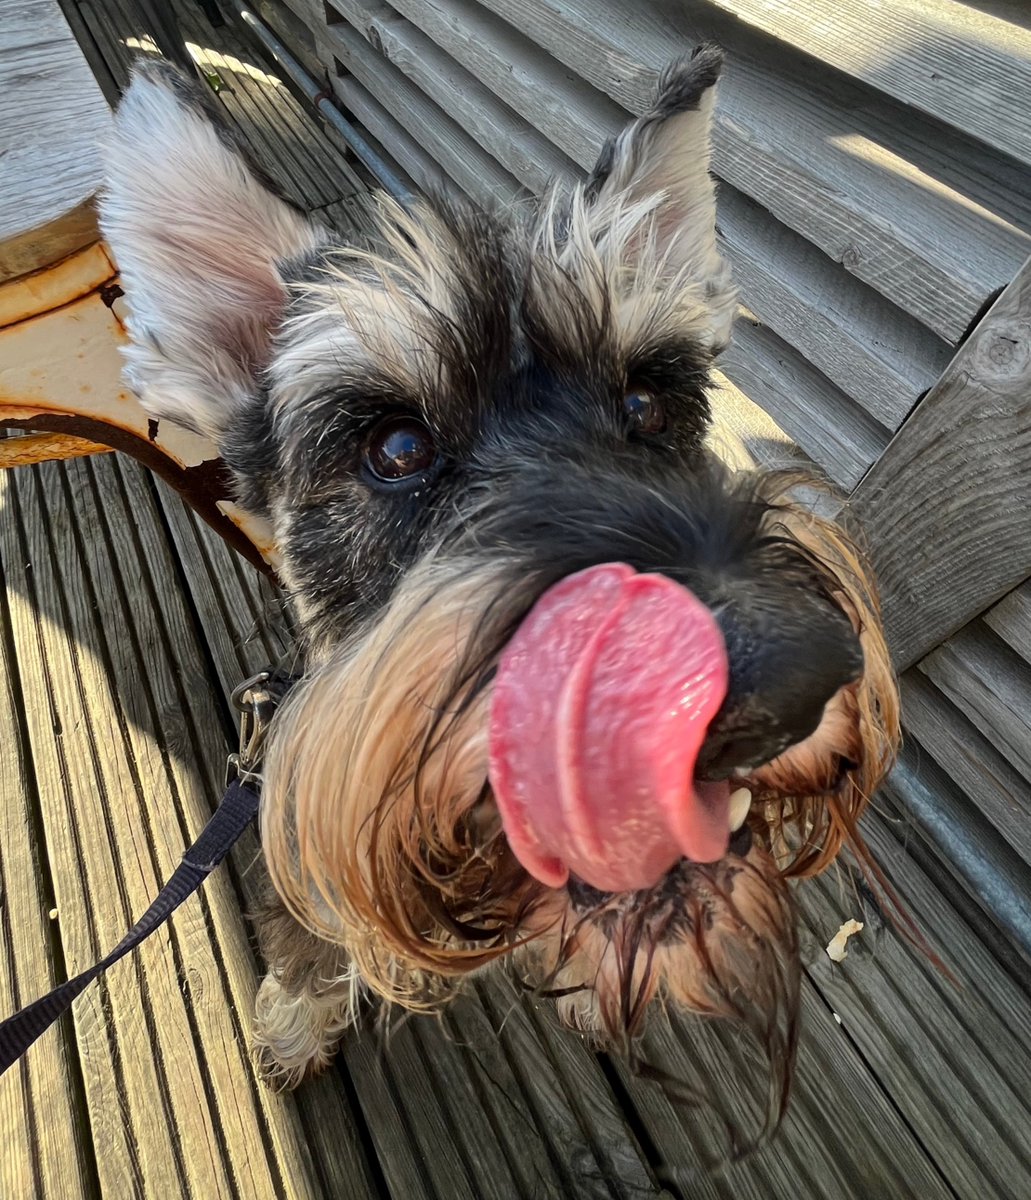 Happy #TongueOutTuesday 🐶 One of my best yet!🐾
⁠
#schnauzerlife #schnauzersrule #schnauzer #schnauzers #schnauzerworld #minischnauzer #dog #dogoftheday #dogsoftwitter #buzbybluebeard #schnauzerlove #gifts #cards #stationery #giftsforfriends #giftsforschnauzerlovers #doggifts